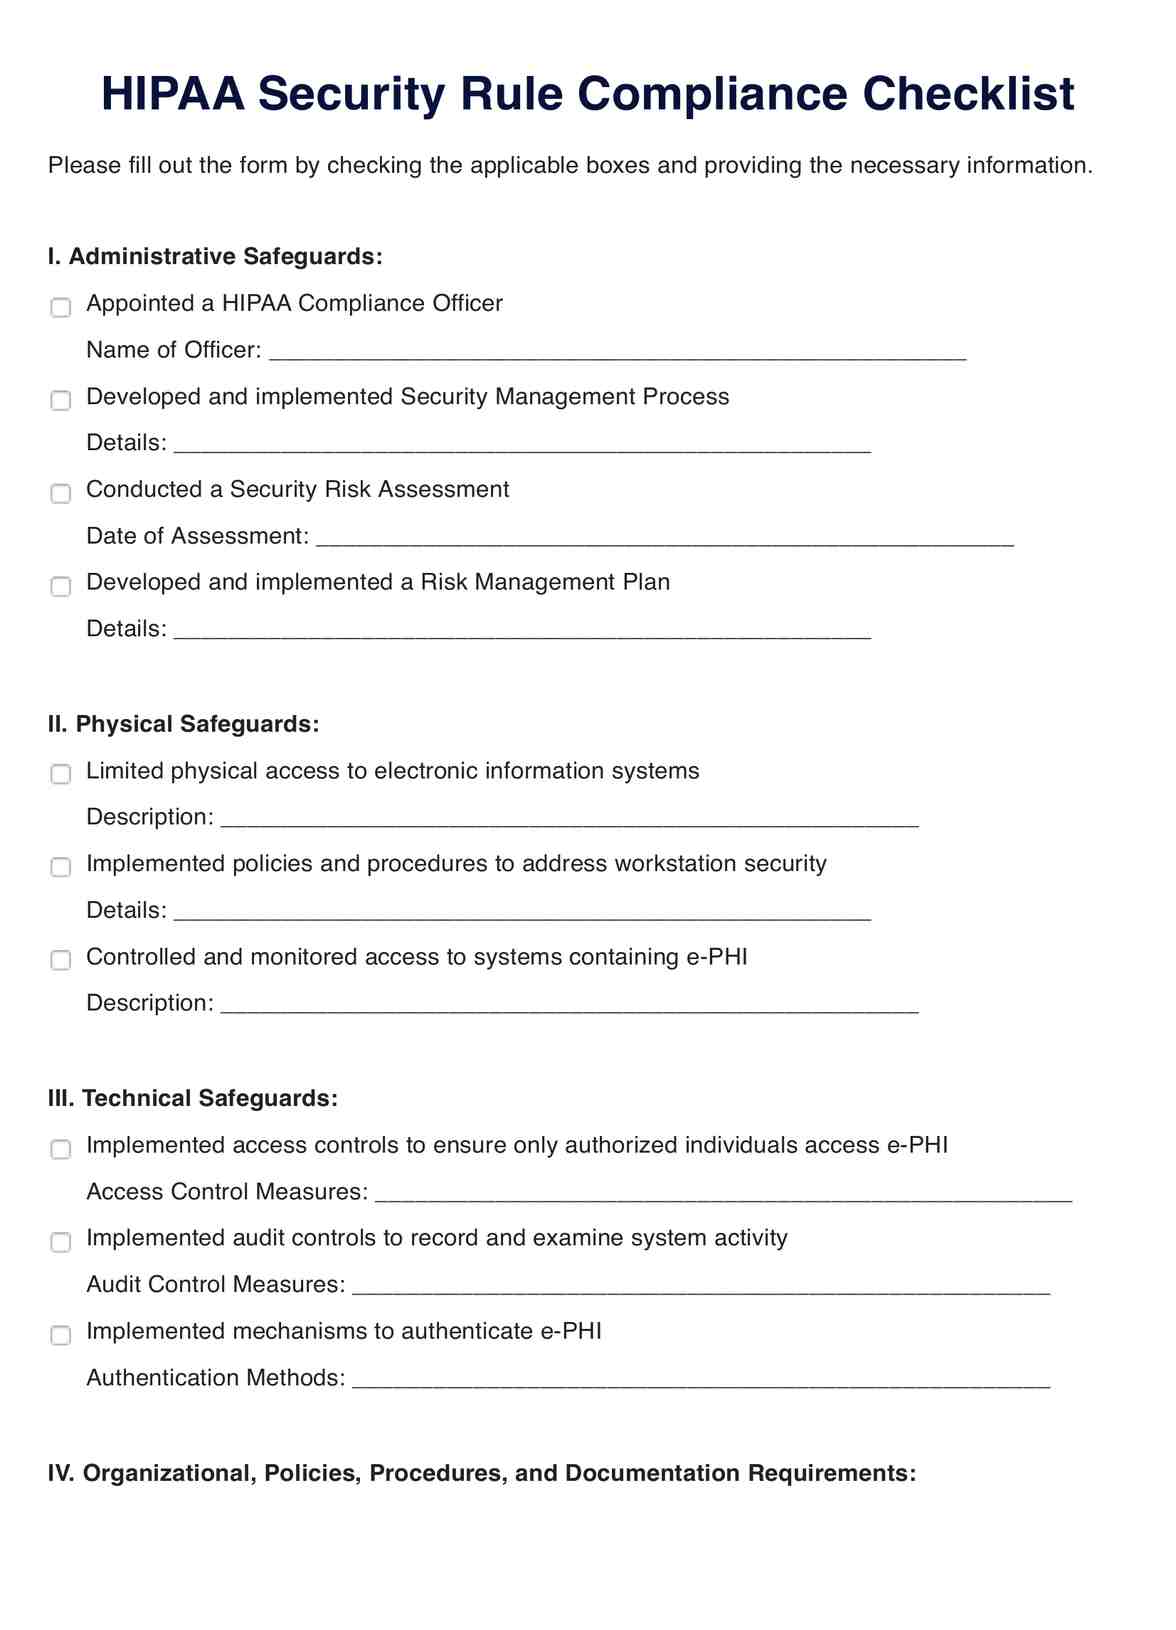 HIPAA Security Rule Checklist PDF Example